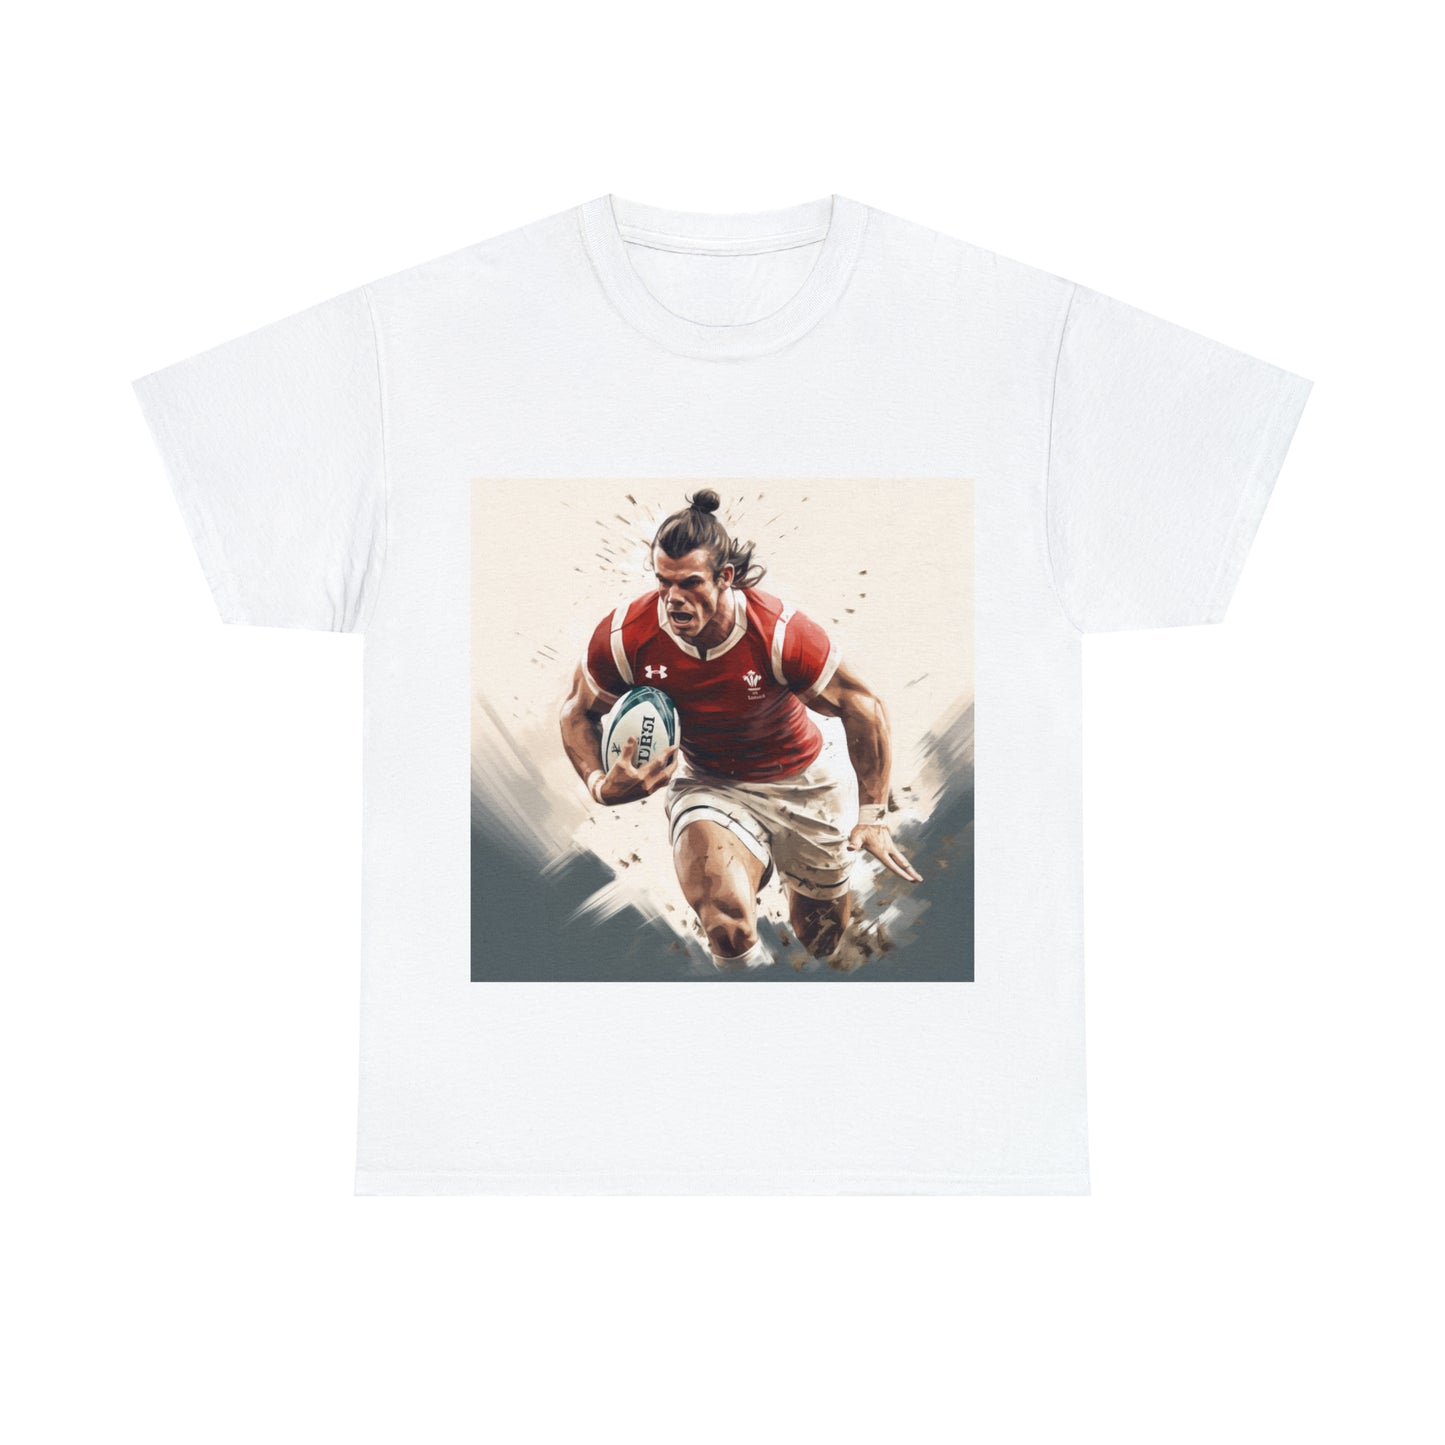 Running Bale - light shirts